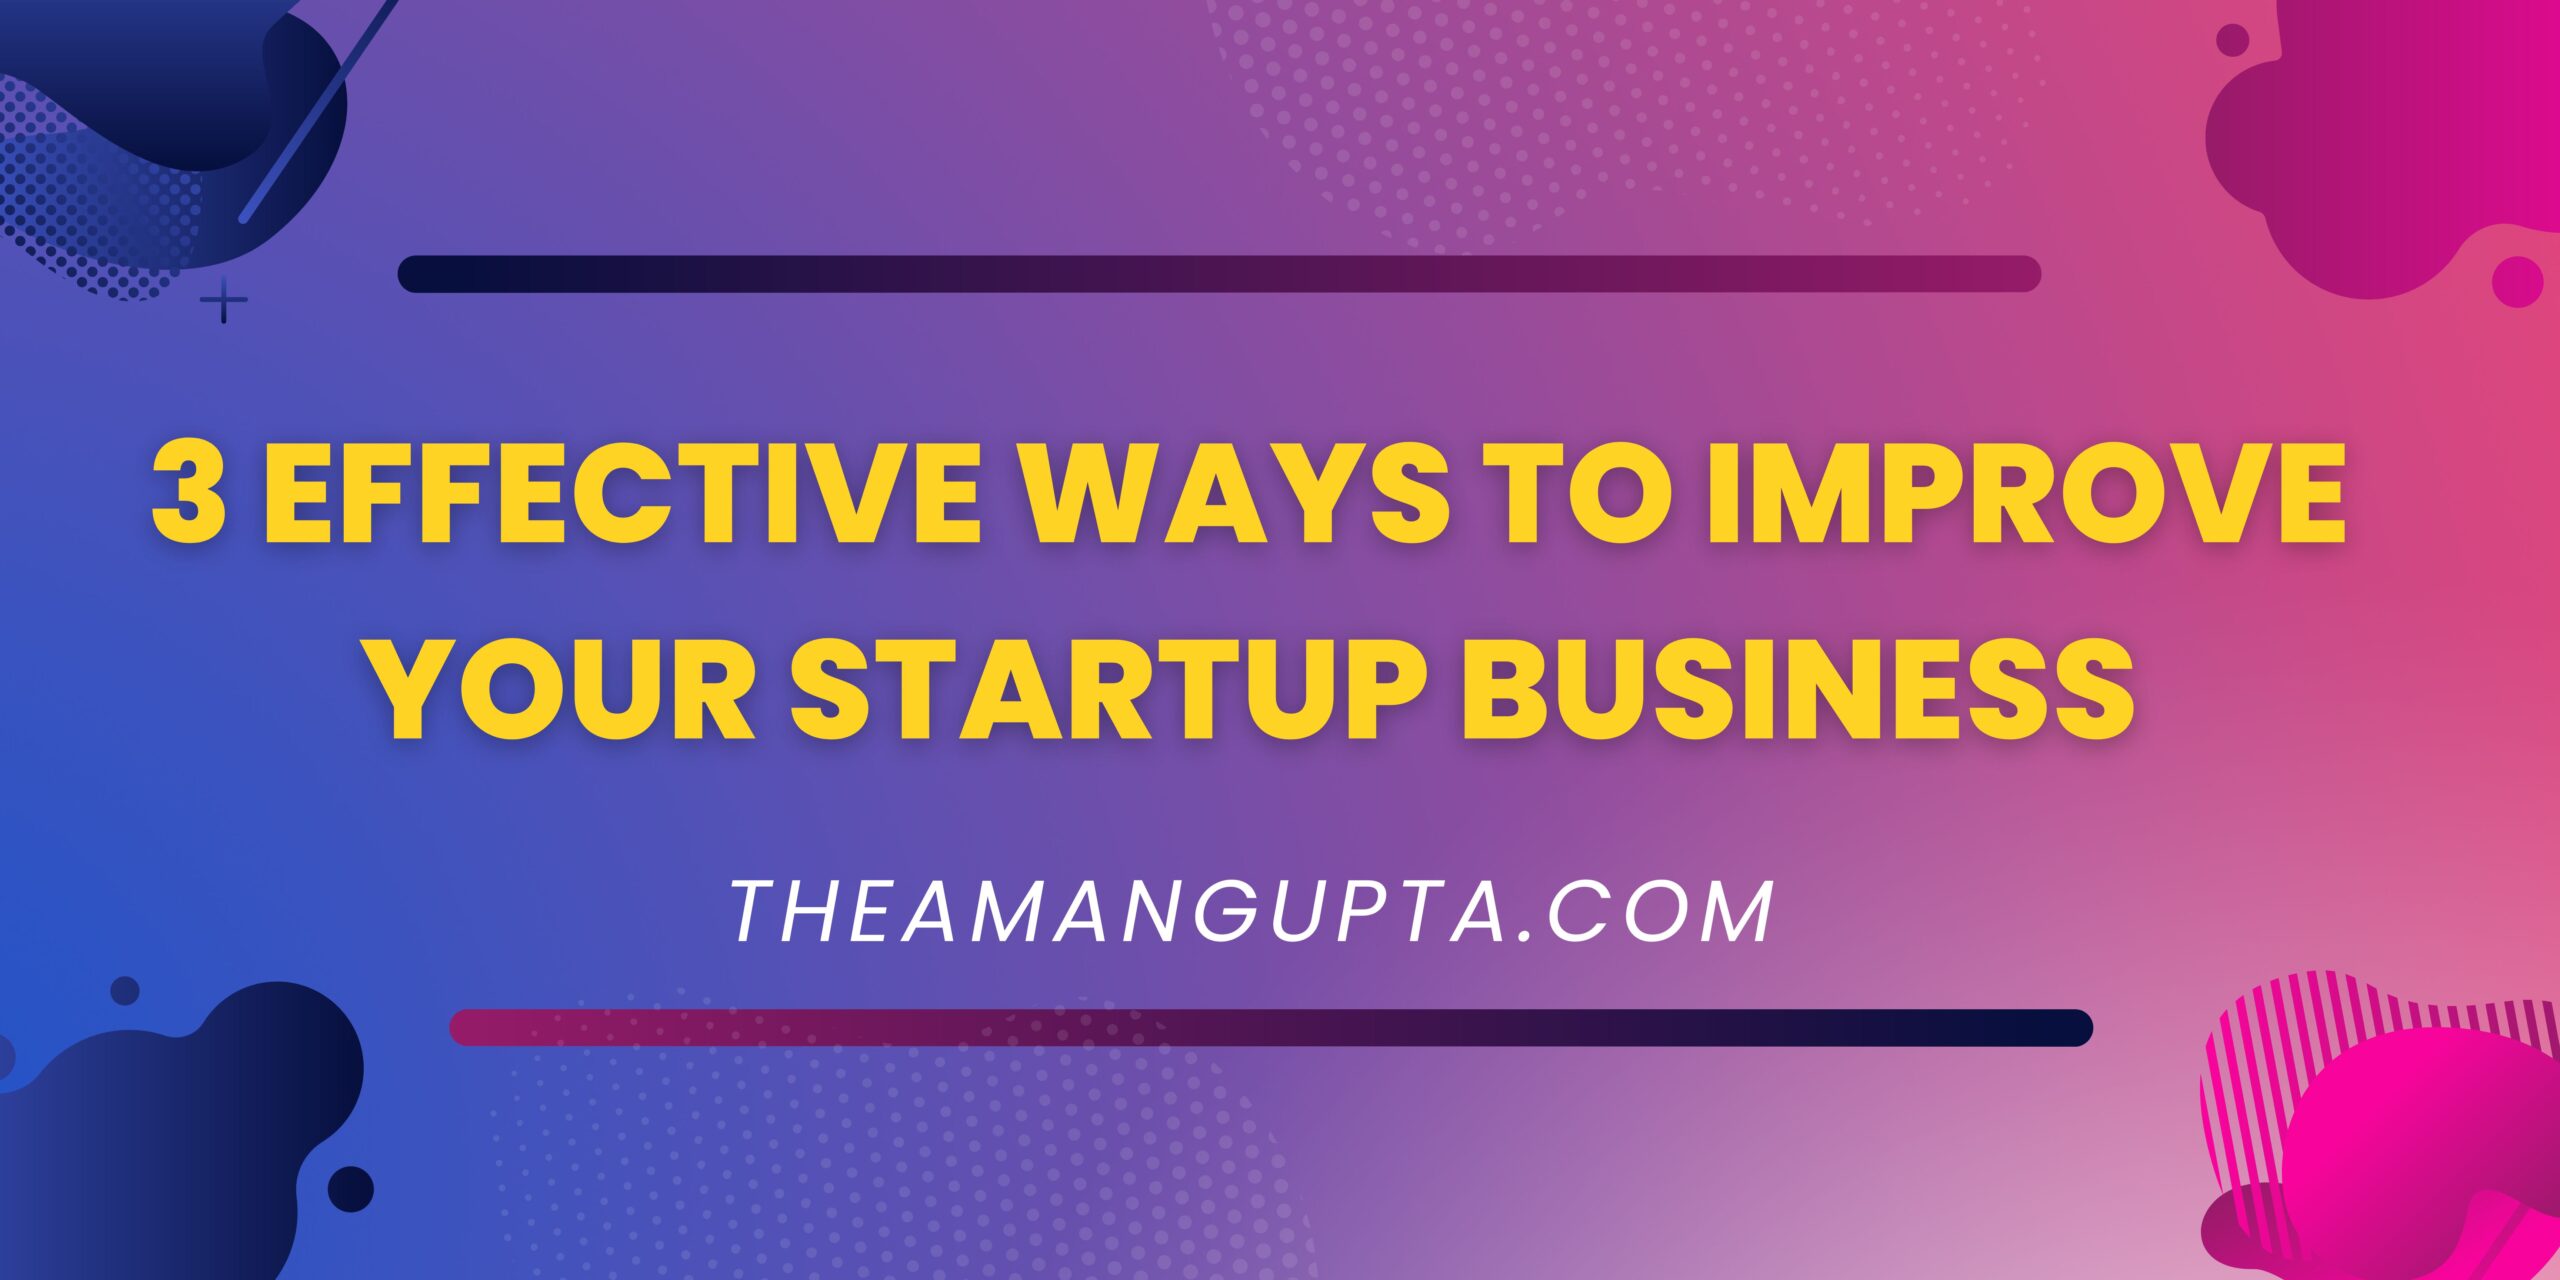 3 Effective Ways To Improve Your Startup Business| StartUp Buisness|TheamanguptaTheamangupta